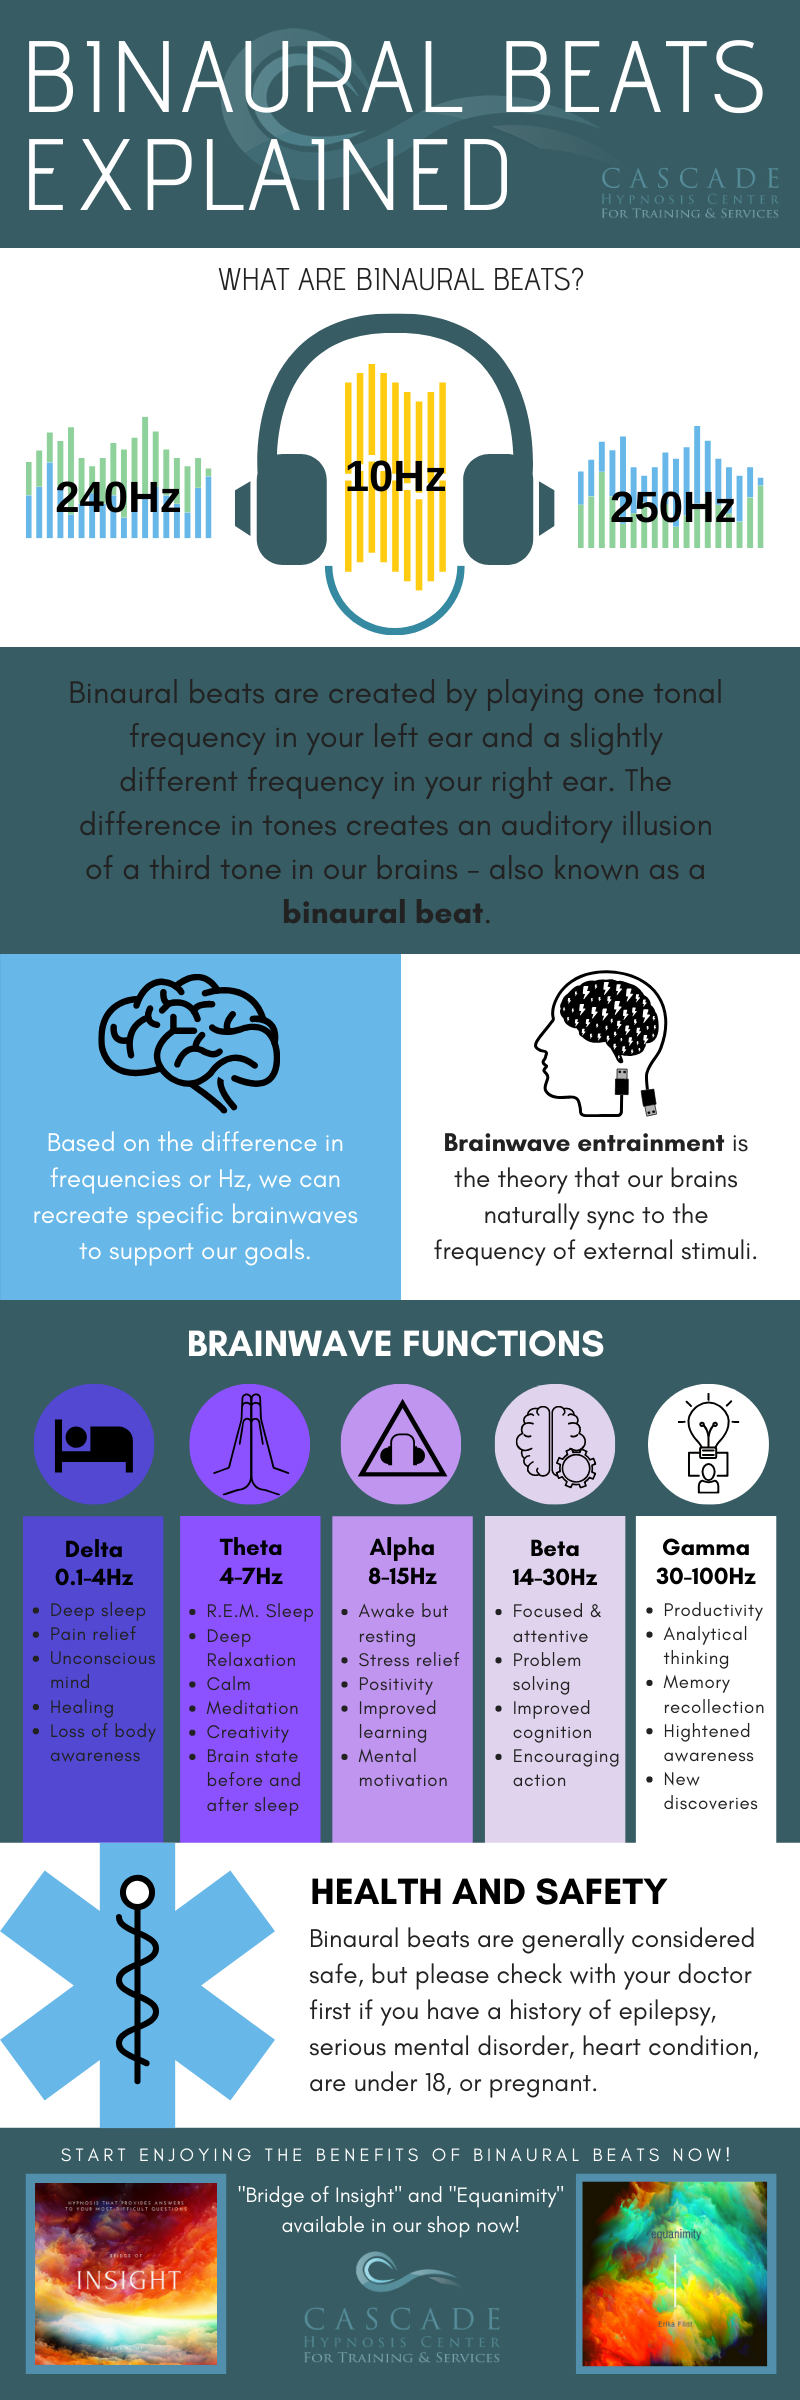 Binaural Beats And Brainwave Entrainment — Cascade Hypnosis Center